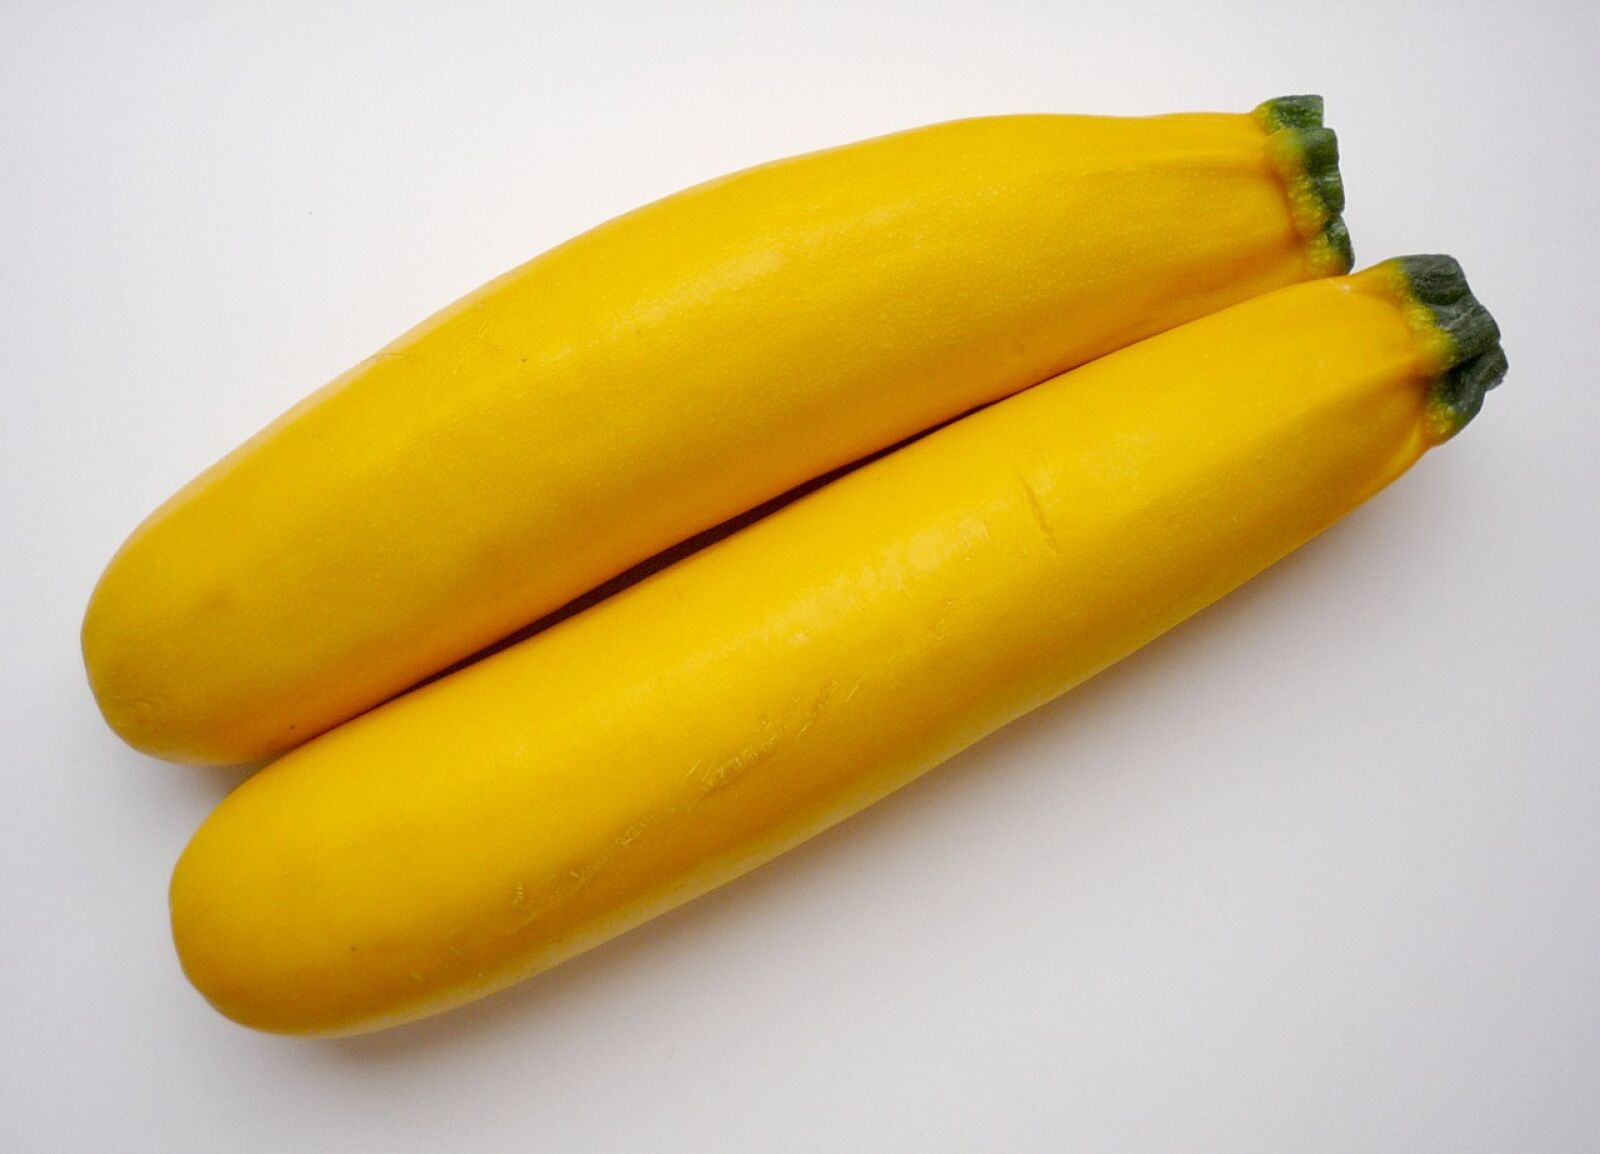 Panasonic DMC-LZ8 sample photo. "Zucchini, yellow, vegetables" photography